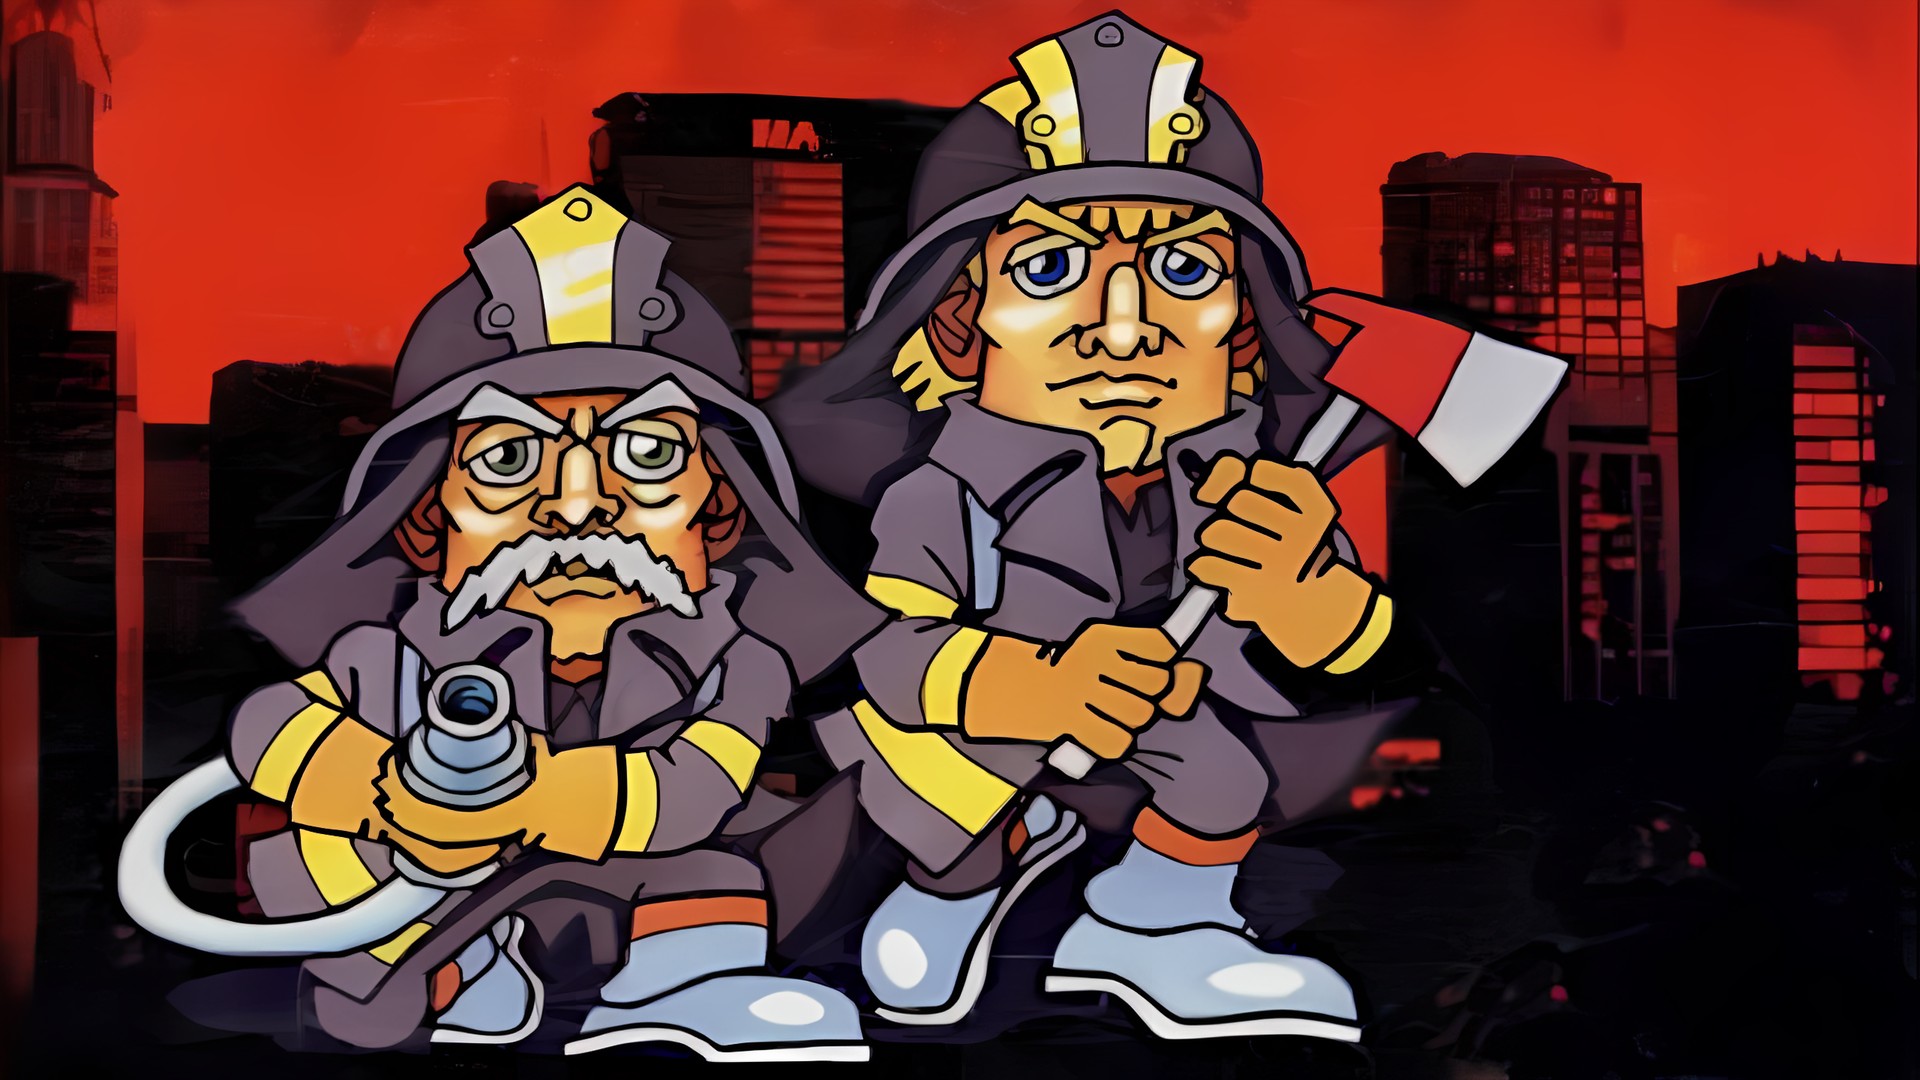 The Firemen 2: Pete & Danny